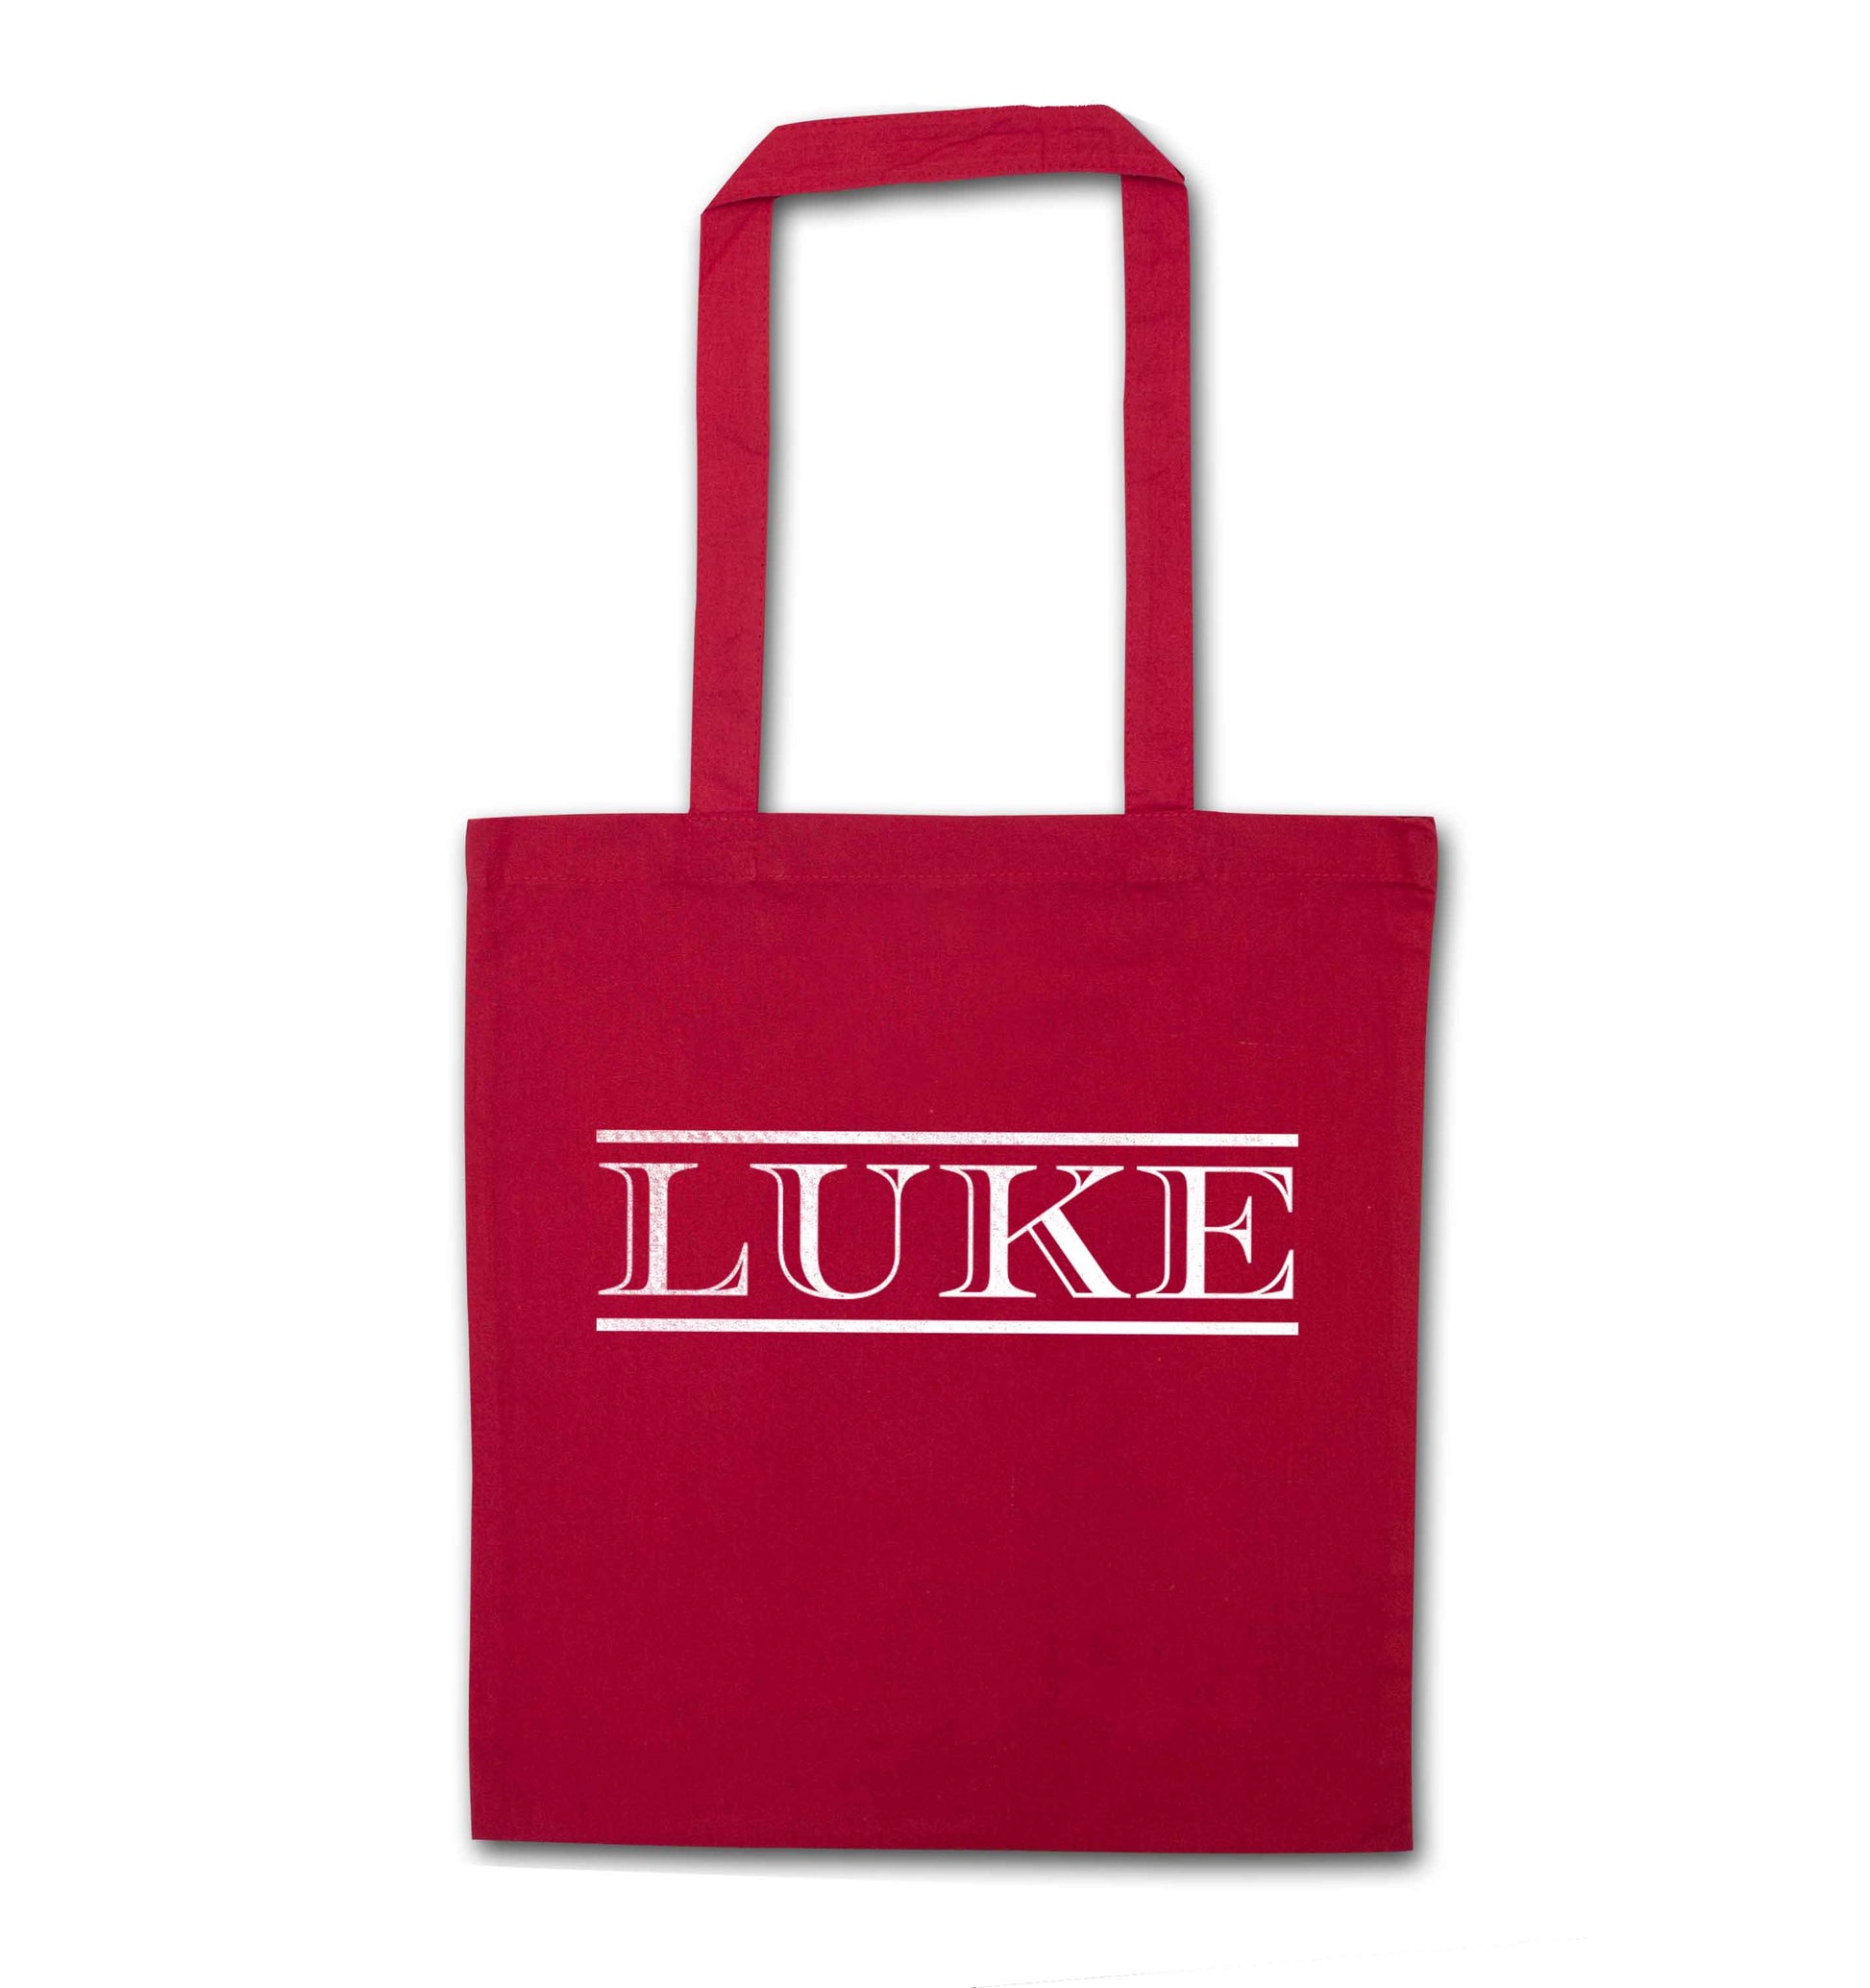 Personalised name red tote bag